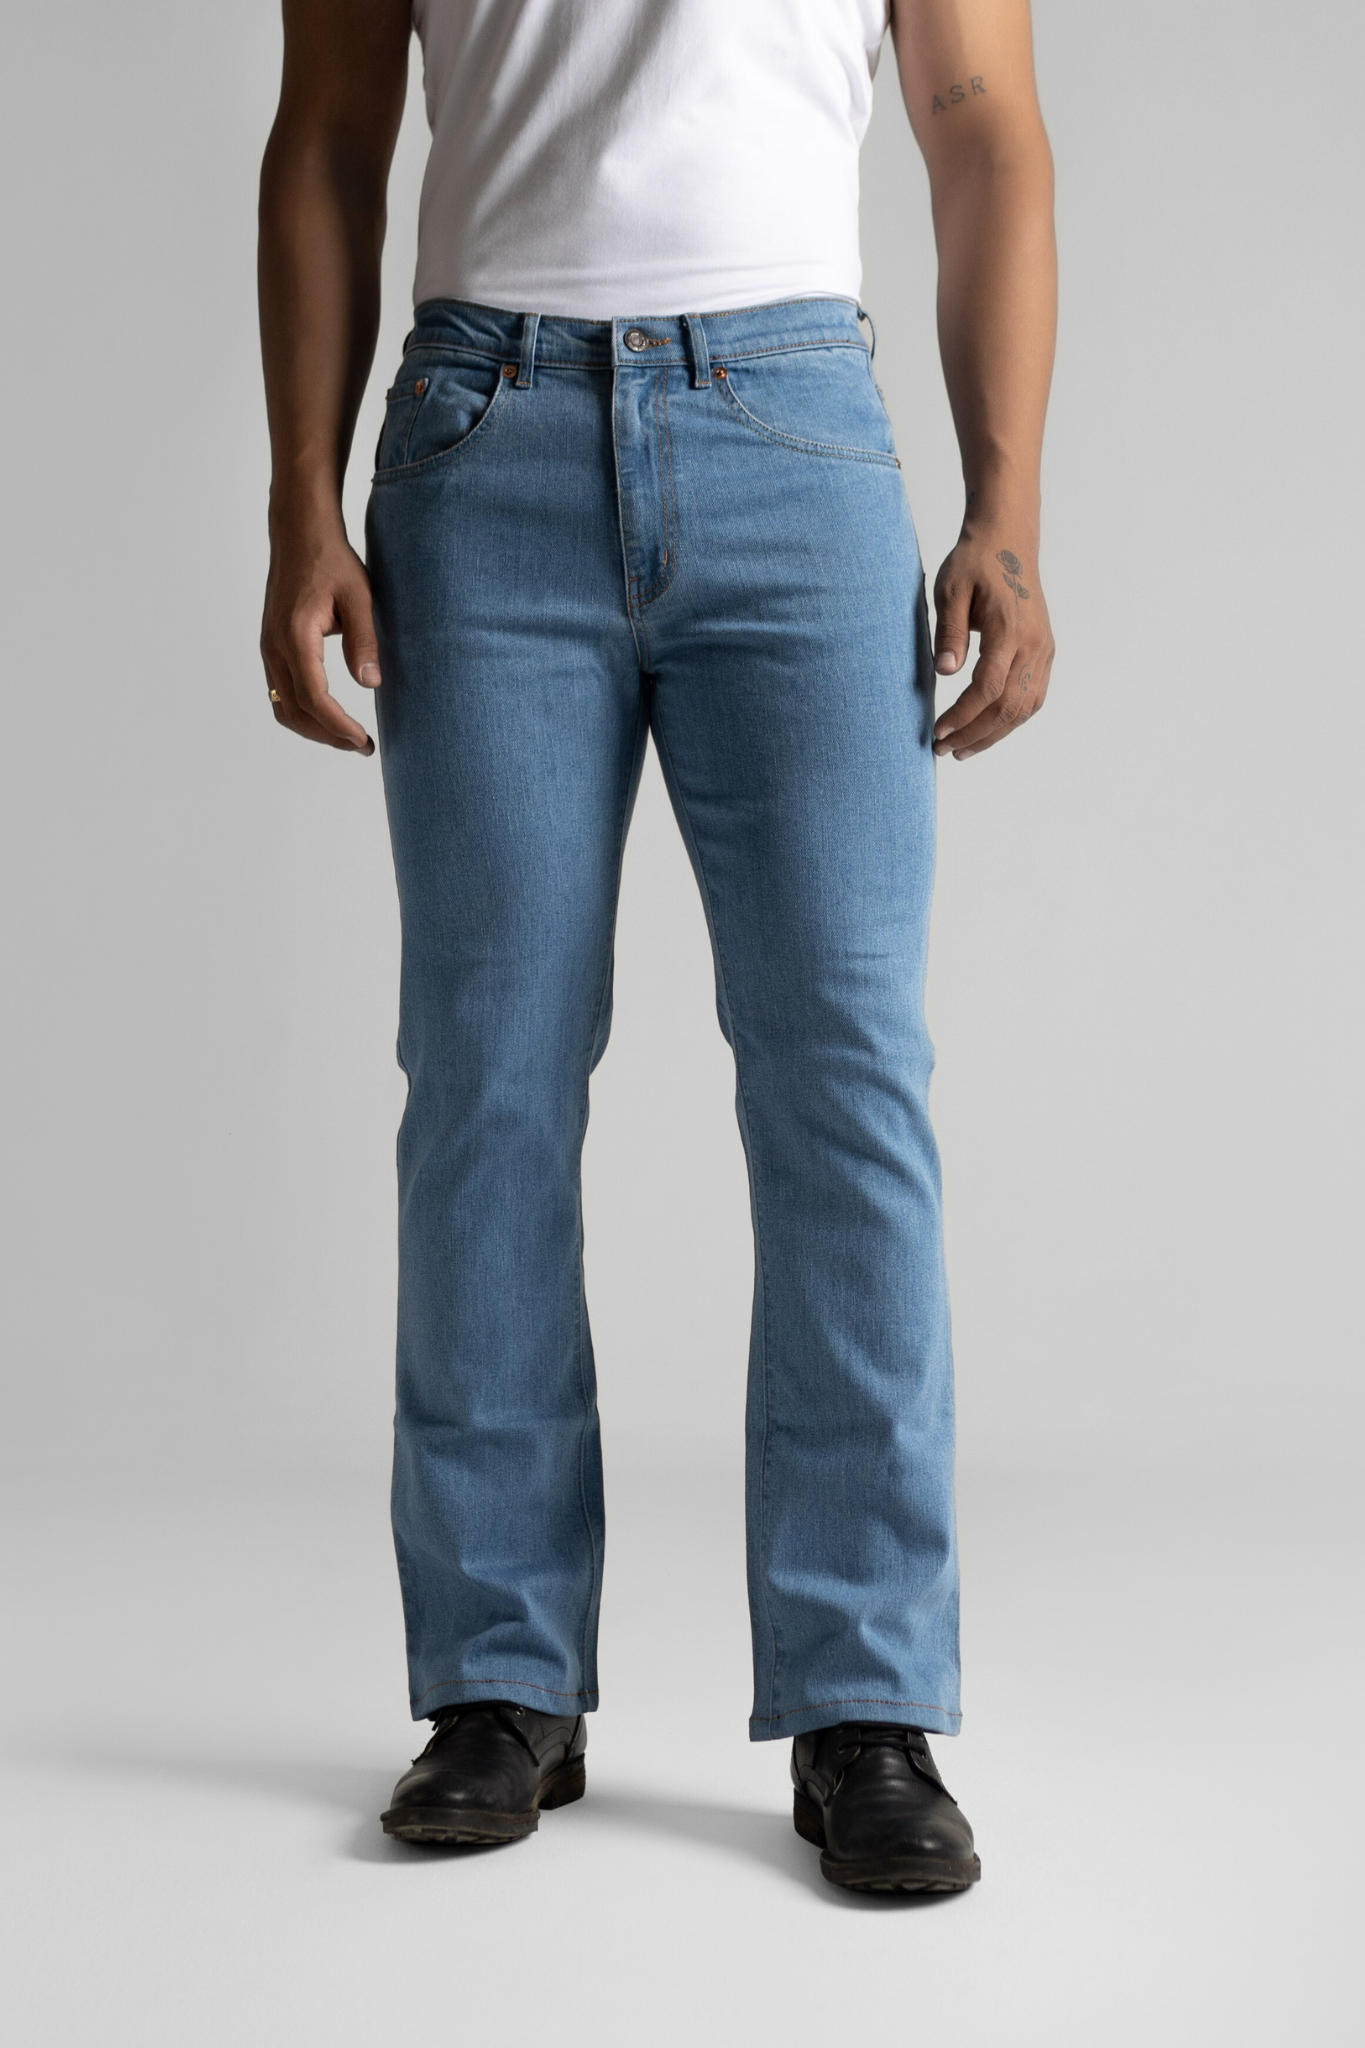 Denim Boot Cut - Light Blue Jeans